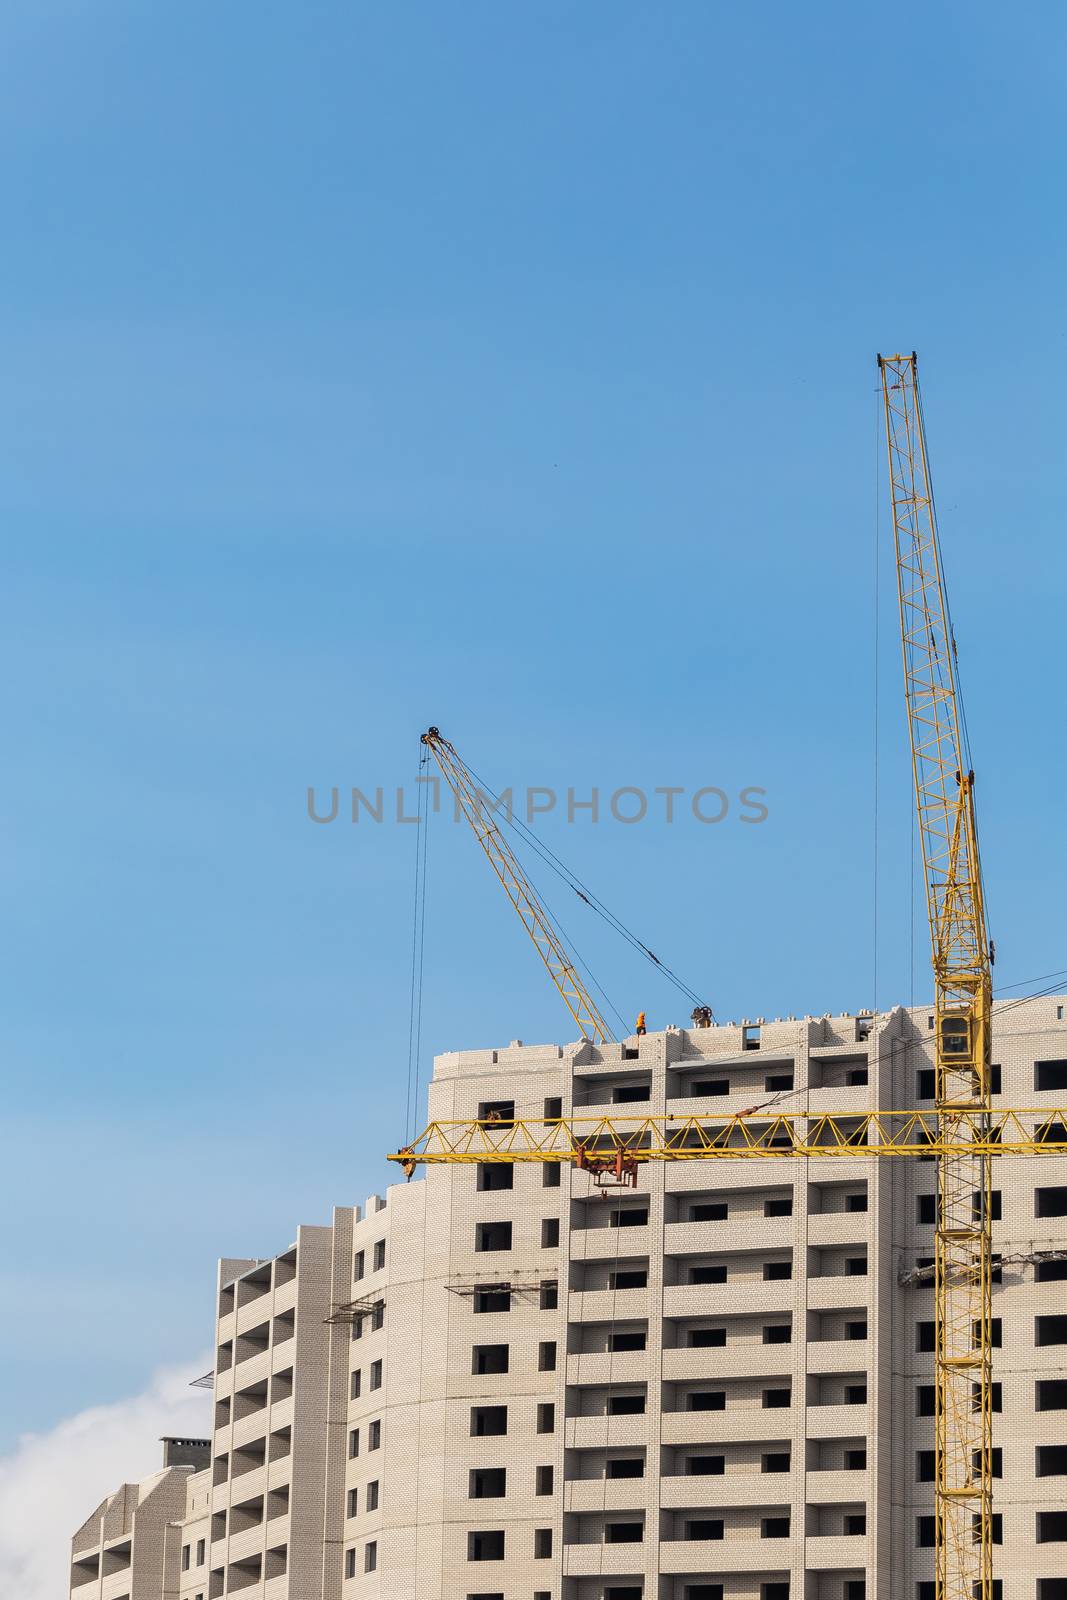 Construction site. Apartment buildings with workers, cranes by DamantisZ